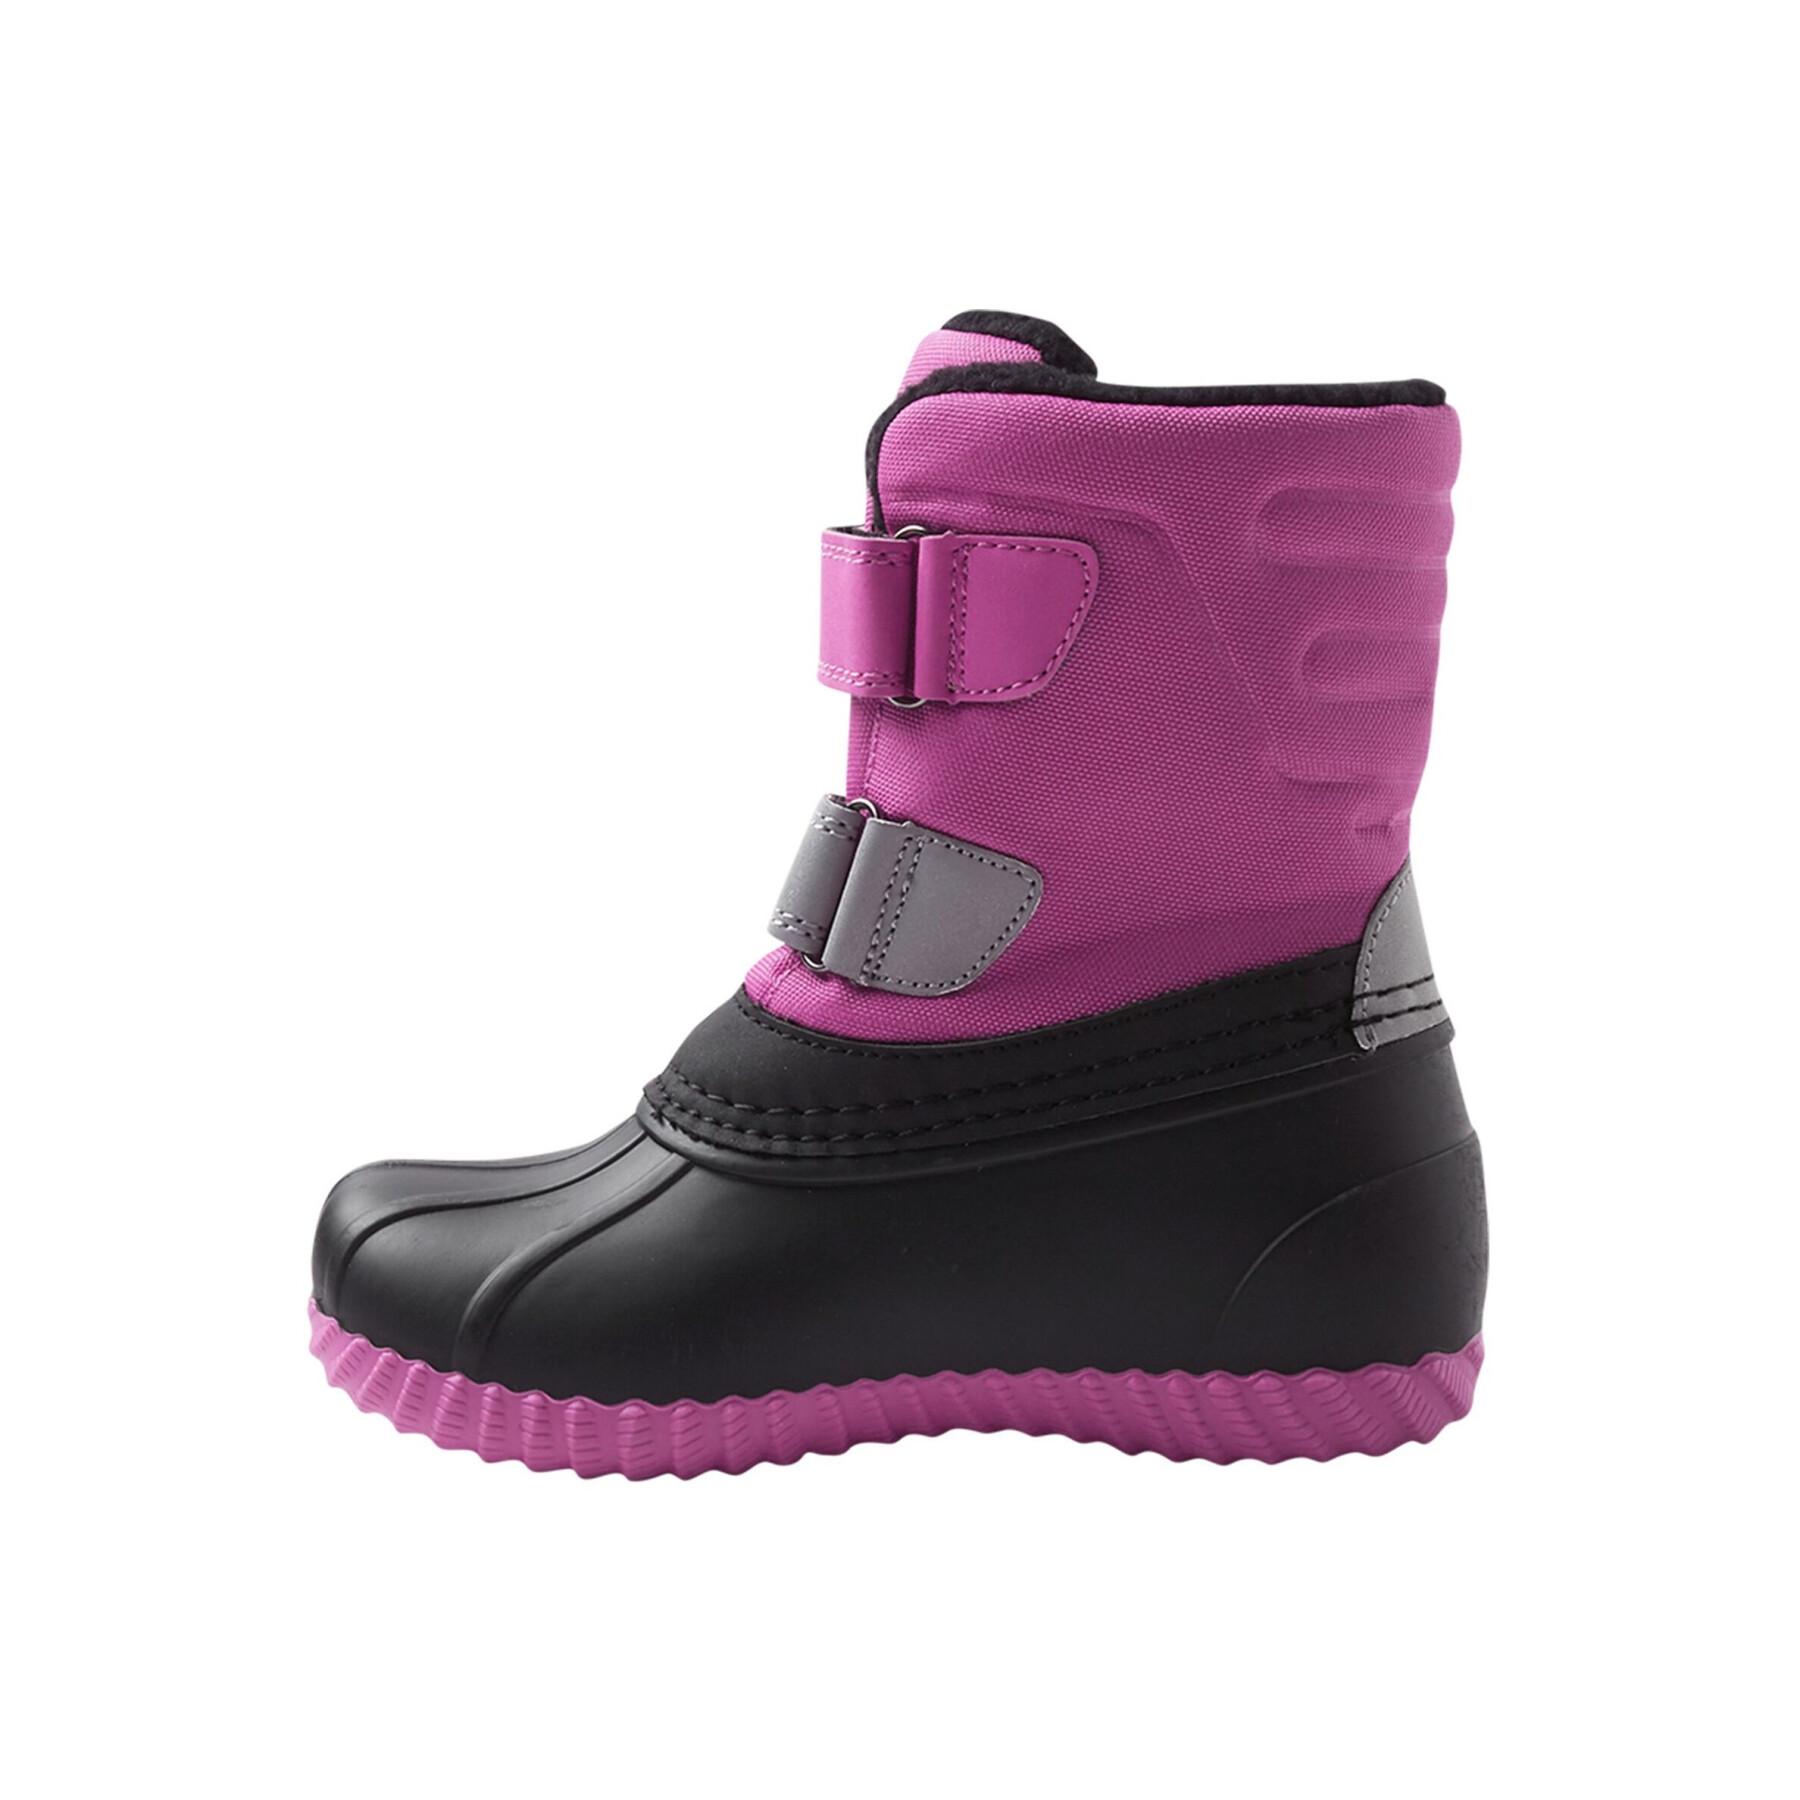 Baby winter boots Reima Lumisin